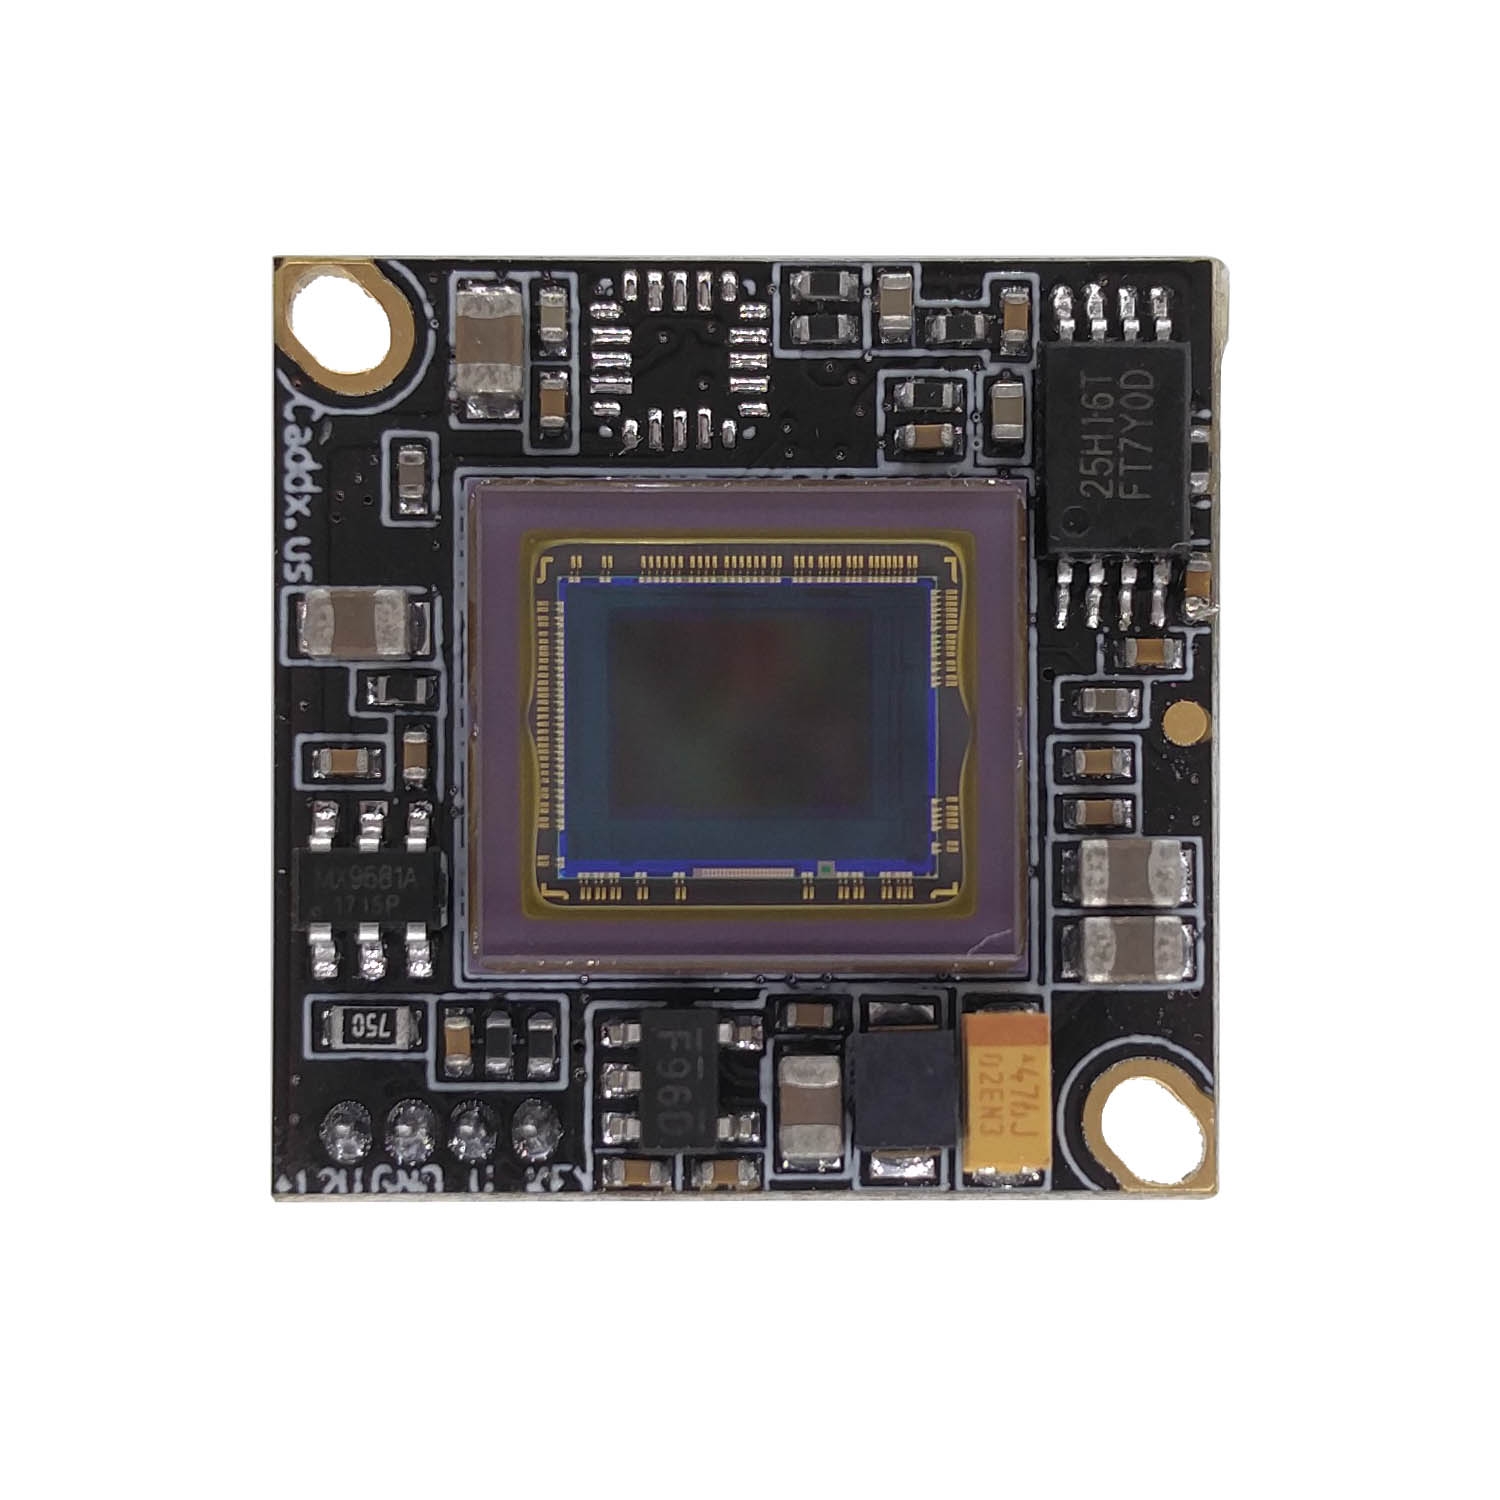 Caddx MB04 Main Board Camera Module PCB Board for Turbo SDR2 Micro SDR2